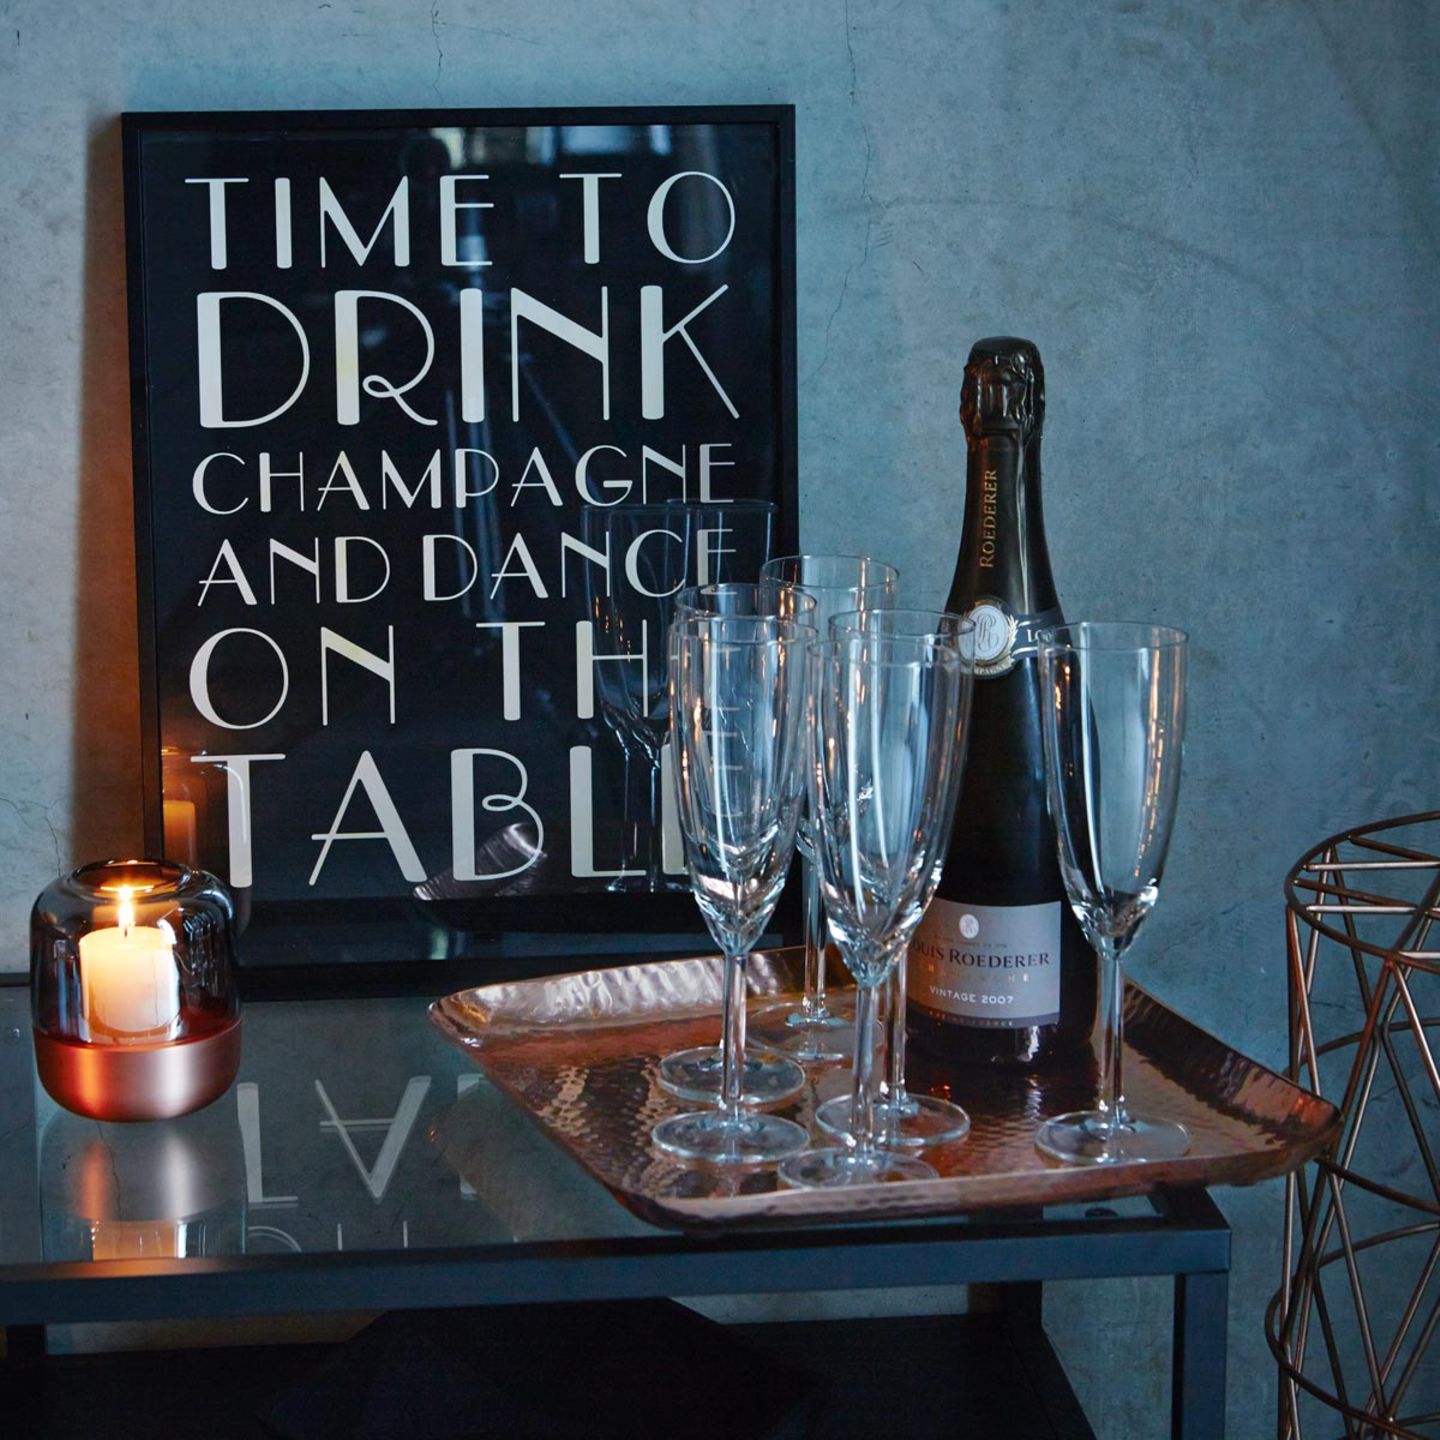 Kupfertablett mit Getränken und Poster "Time to drink champagne and dance on the table"